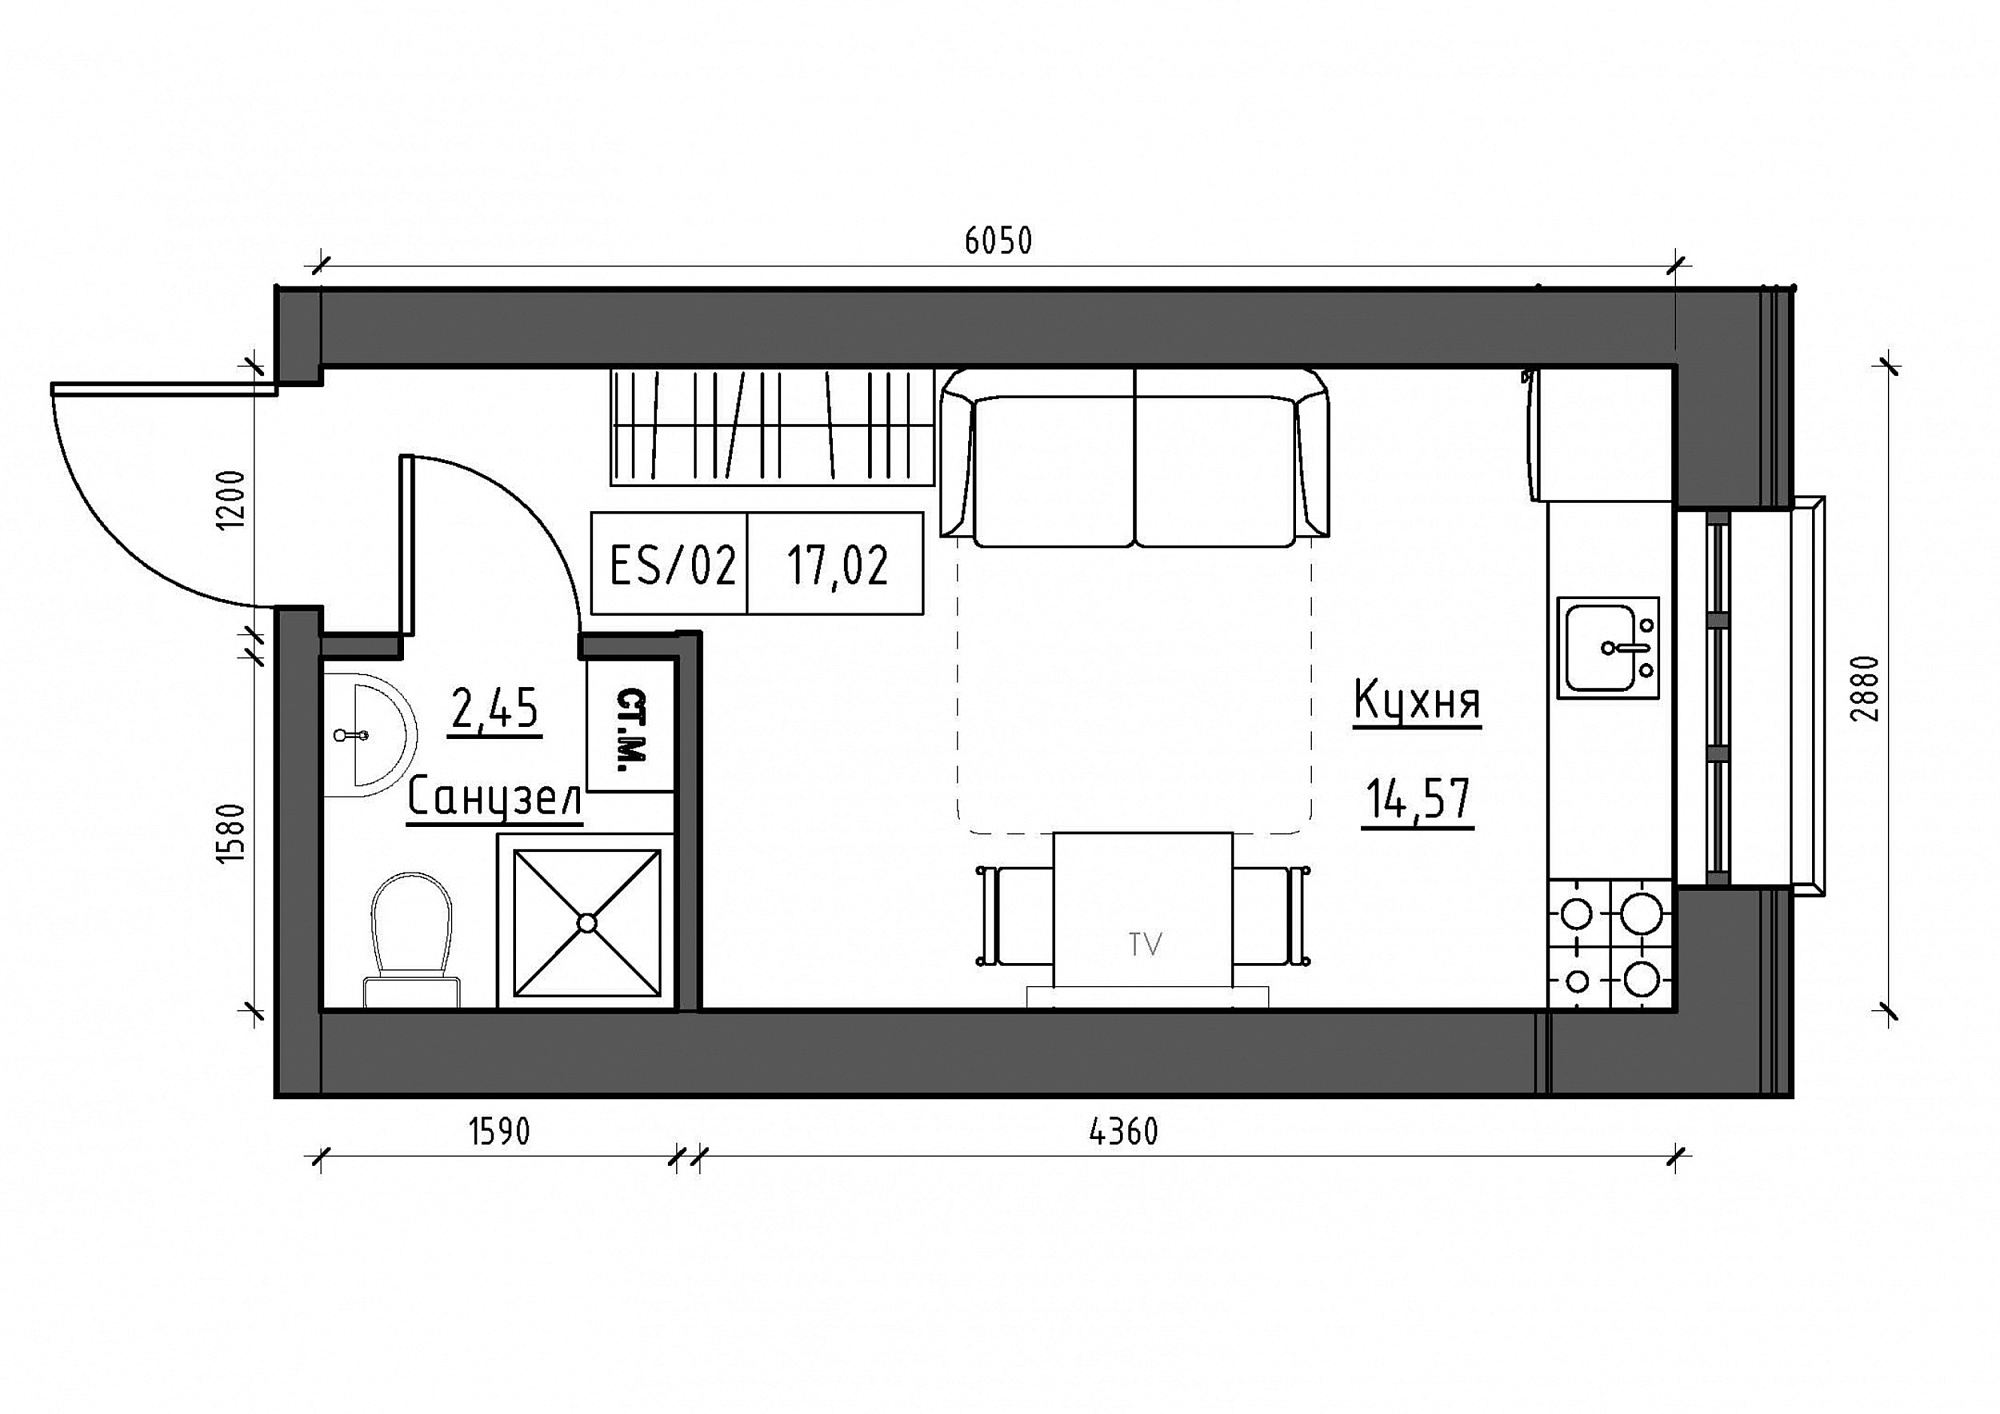 Planning Smart flats area 17.02m2, KS-012-02/0014.